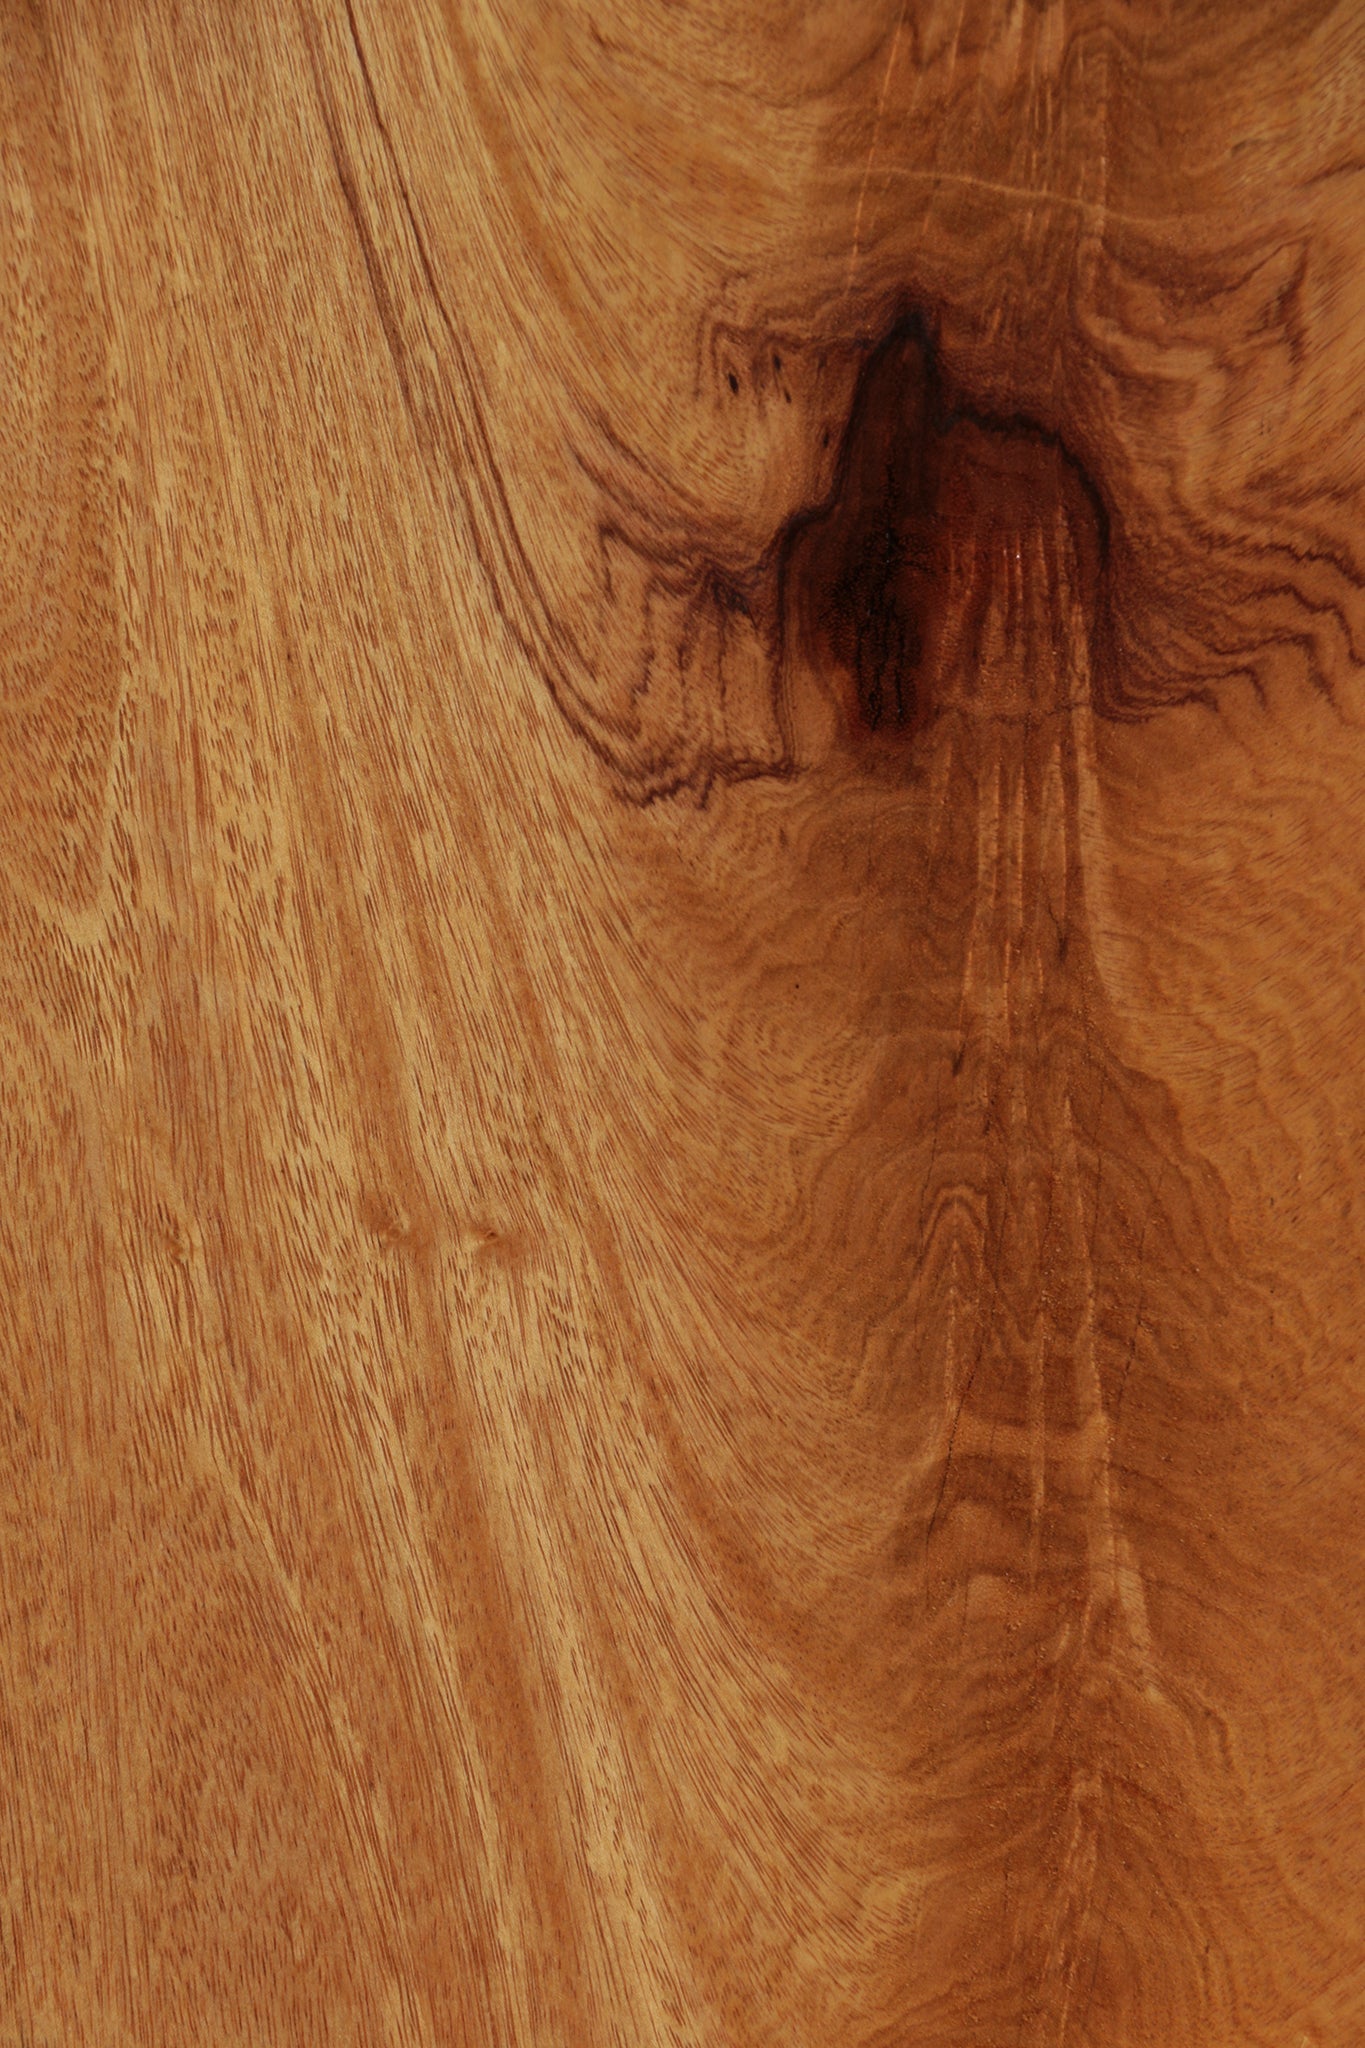 Figured Crotchwood Cerejeira Lumber